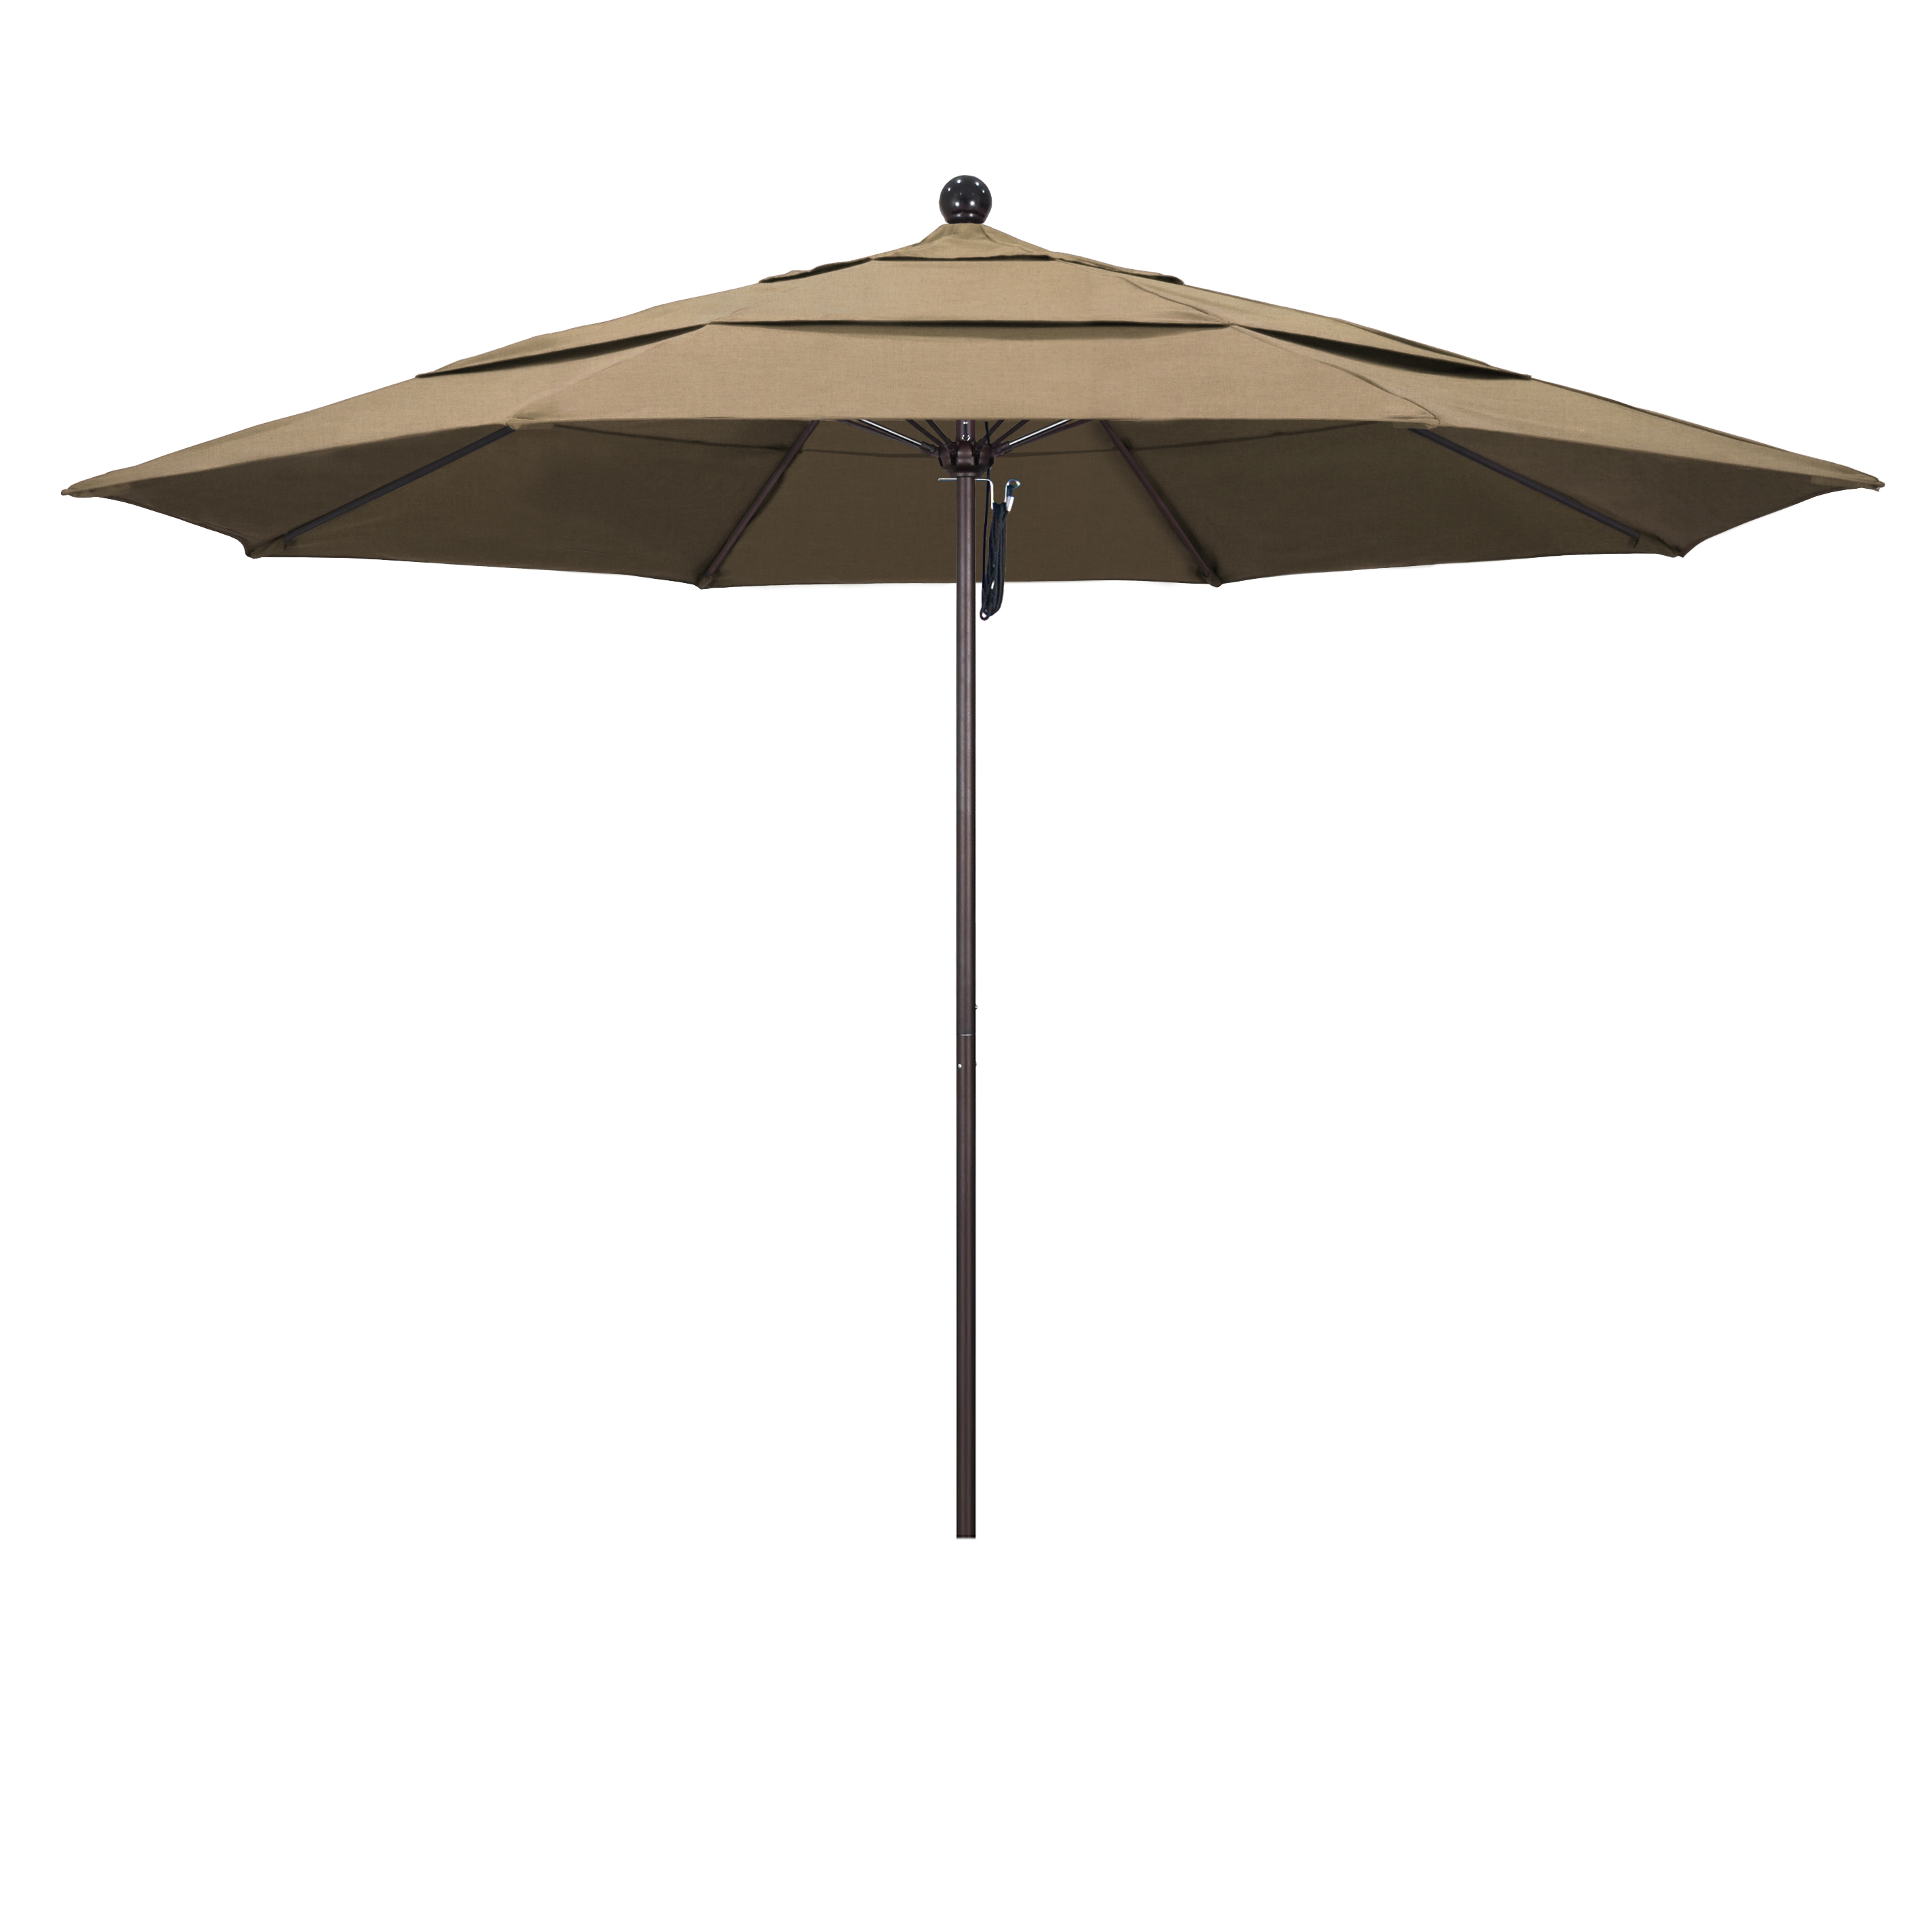 Picture of California Umbrella ALTO118117-5476-DWV 11 ft. Fiberglass Market Umbrella PO DVent Bronze-Sunbrella-Heather Beige